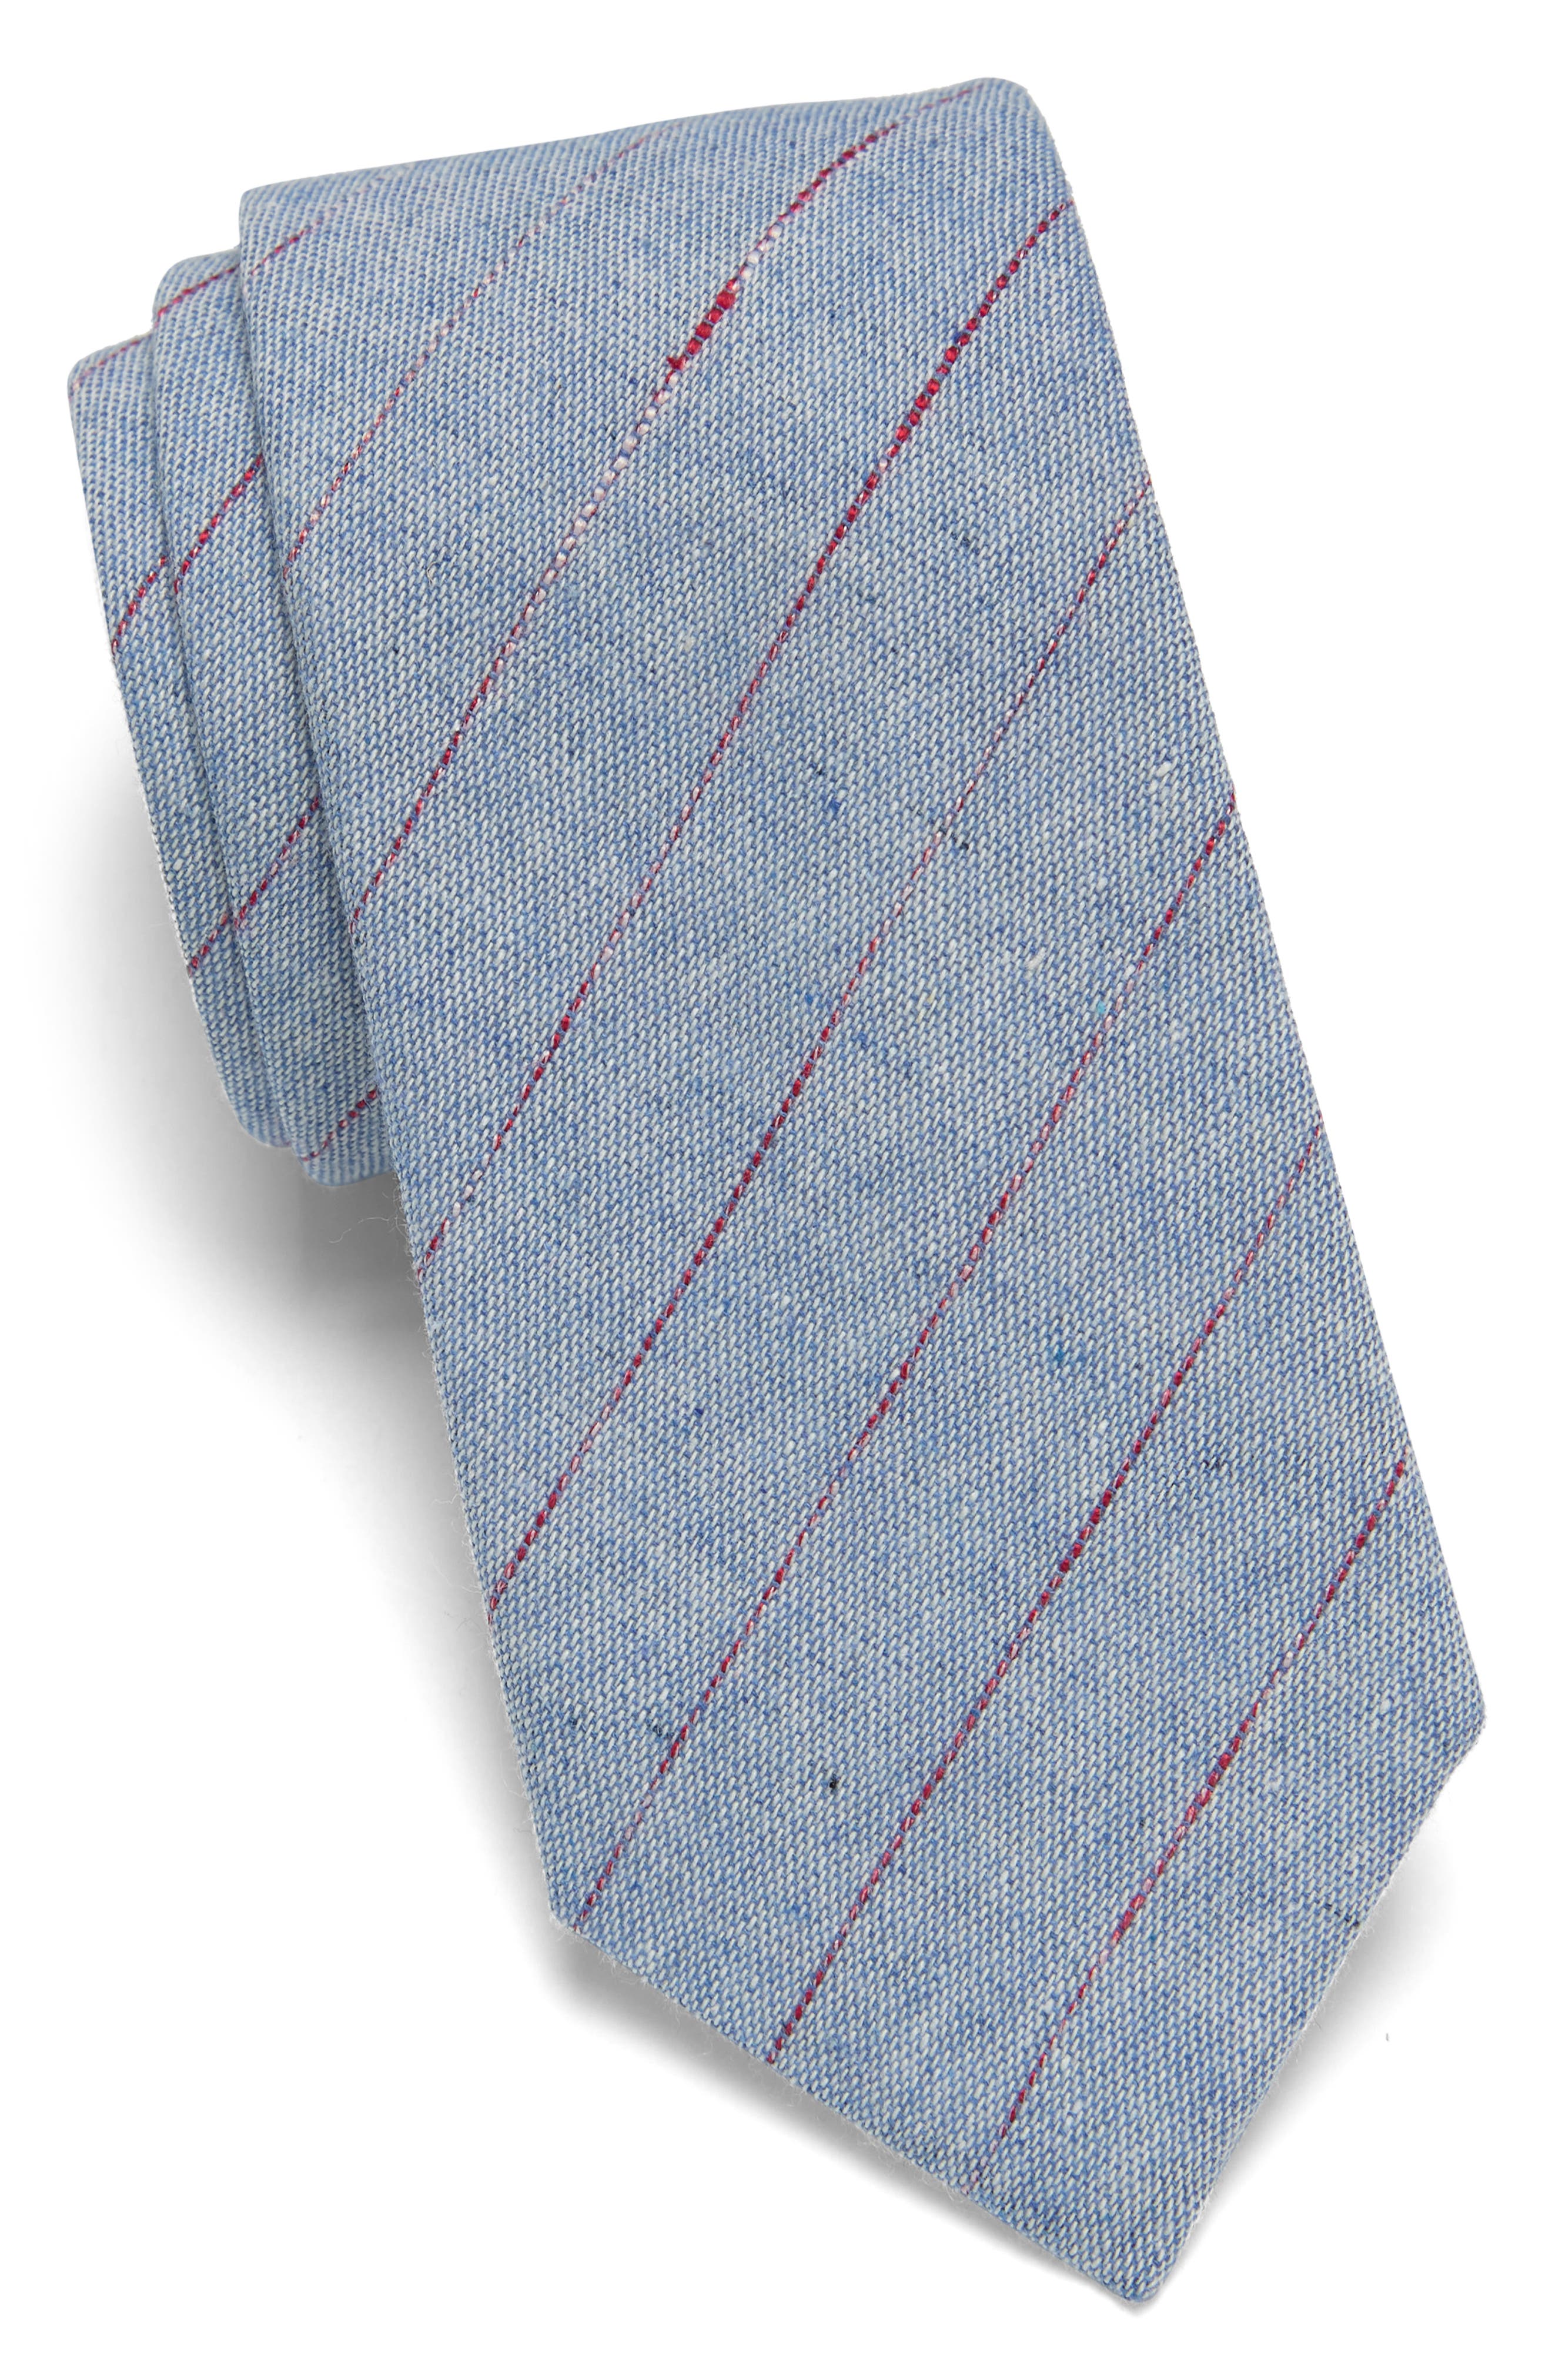 New Mens Original Penguin Kline Burgundy Plaid Skinny Cotton Neck Tie Necktie